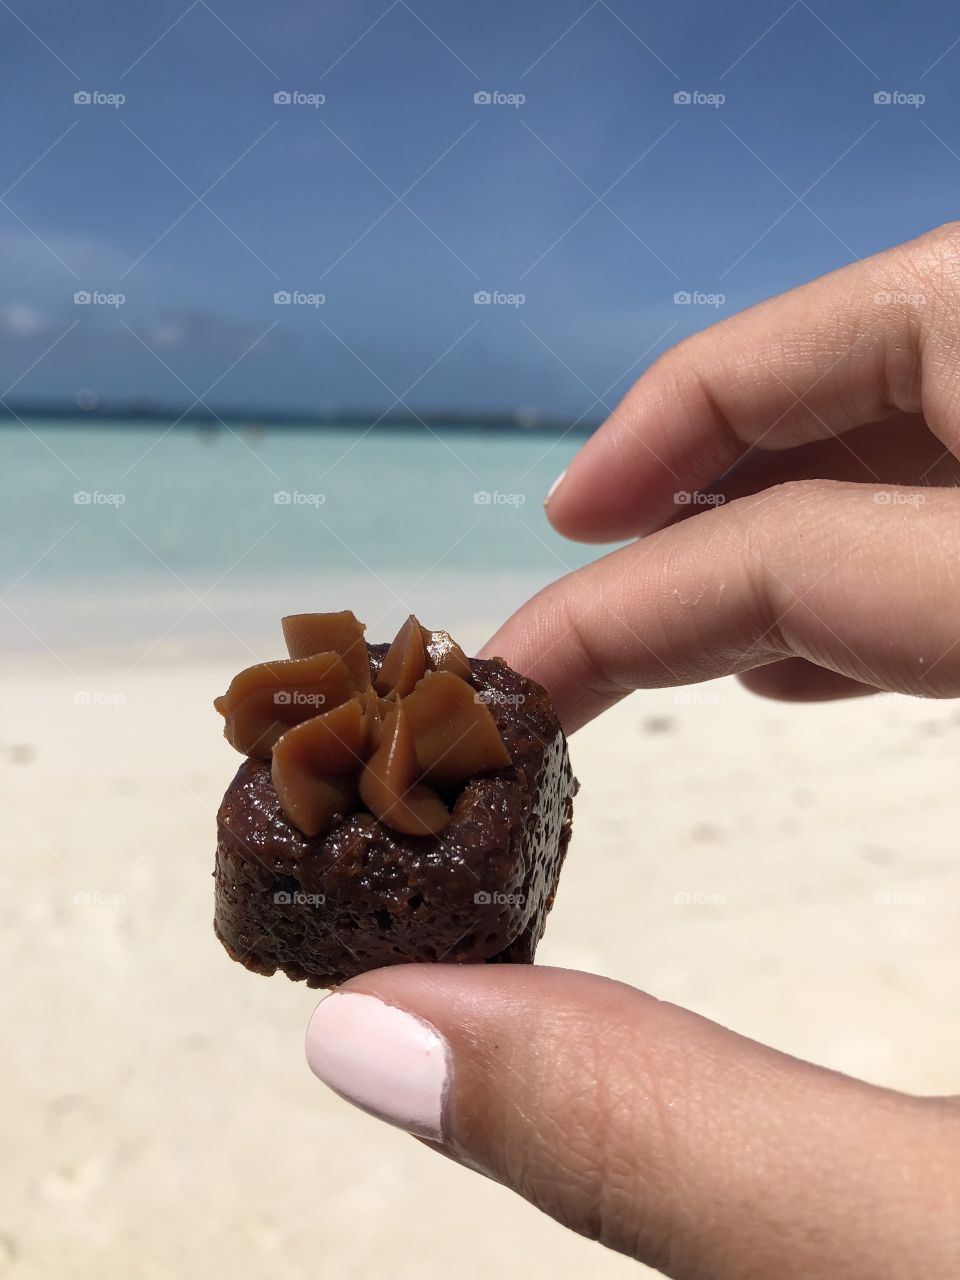 Brownie by the beach